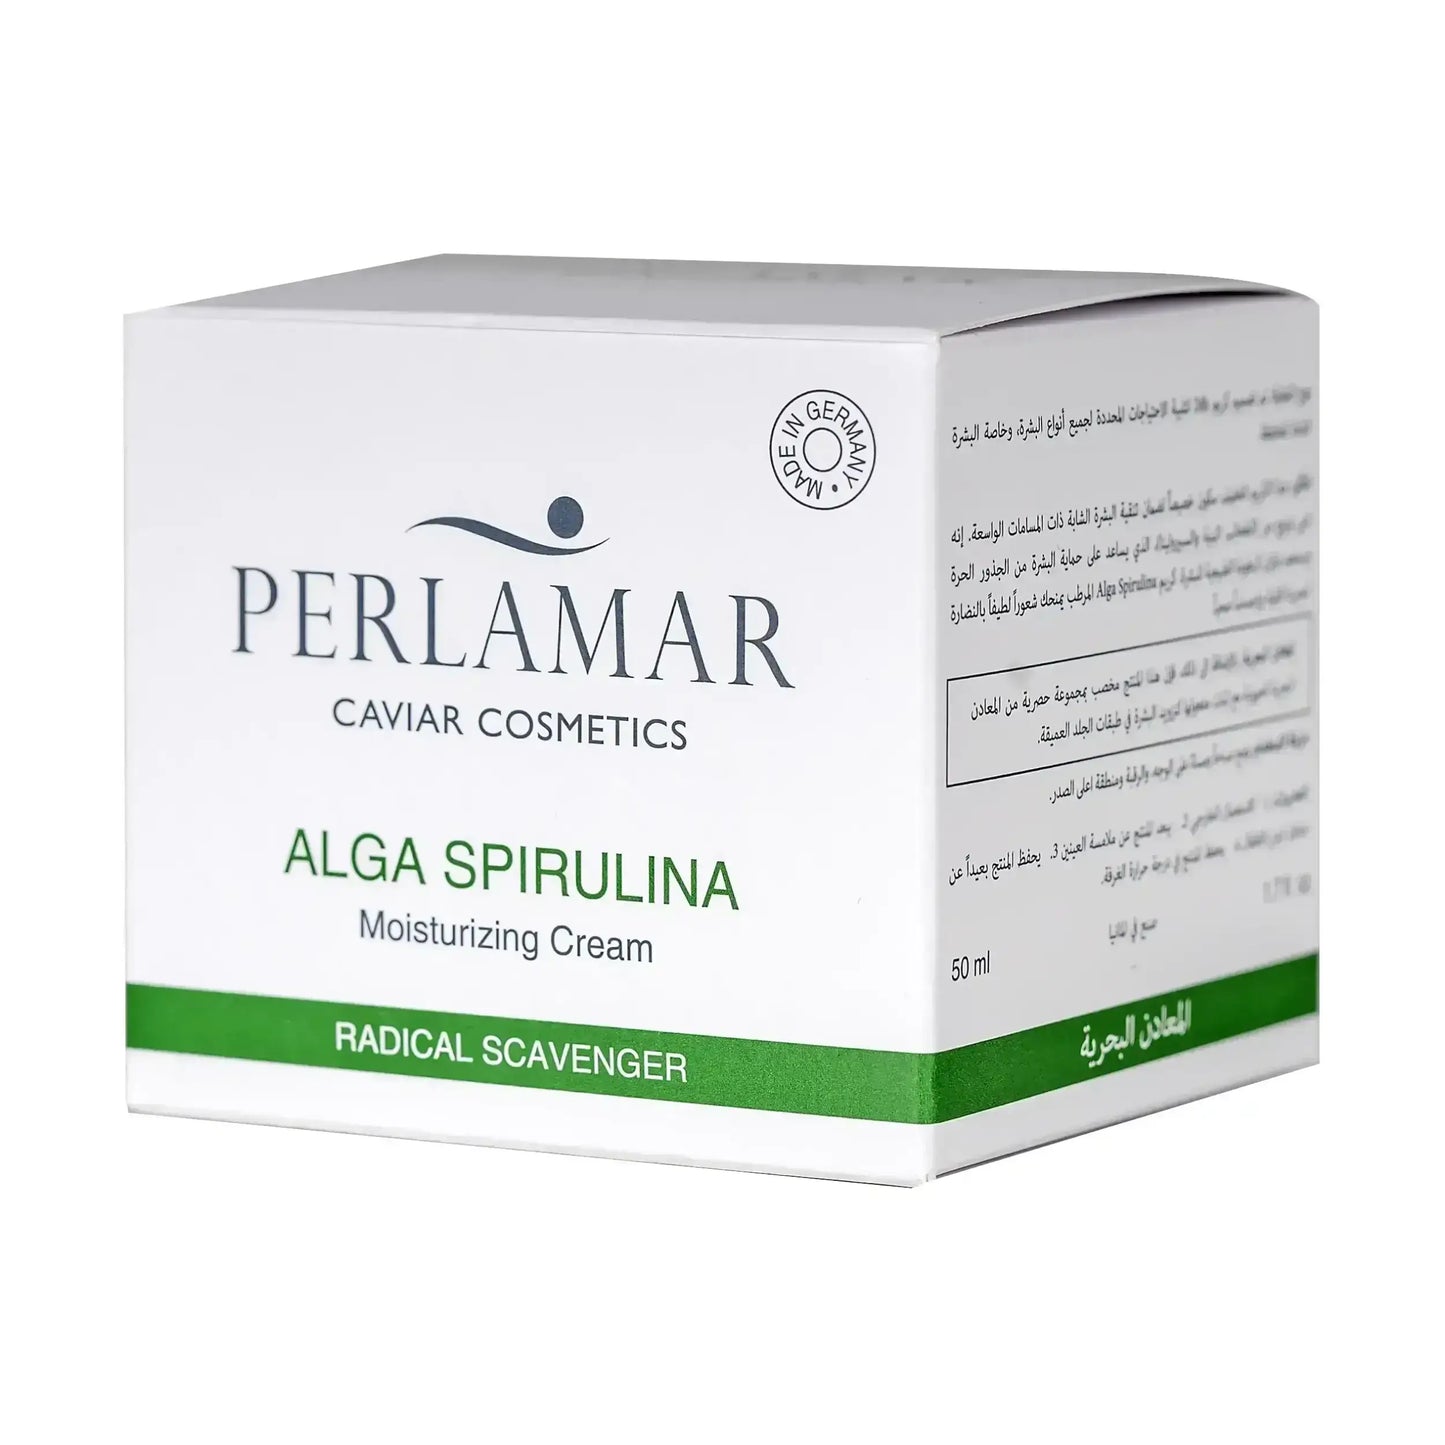 Perlamar Alga Spirulina Moisturizing Cream 50 ml